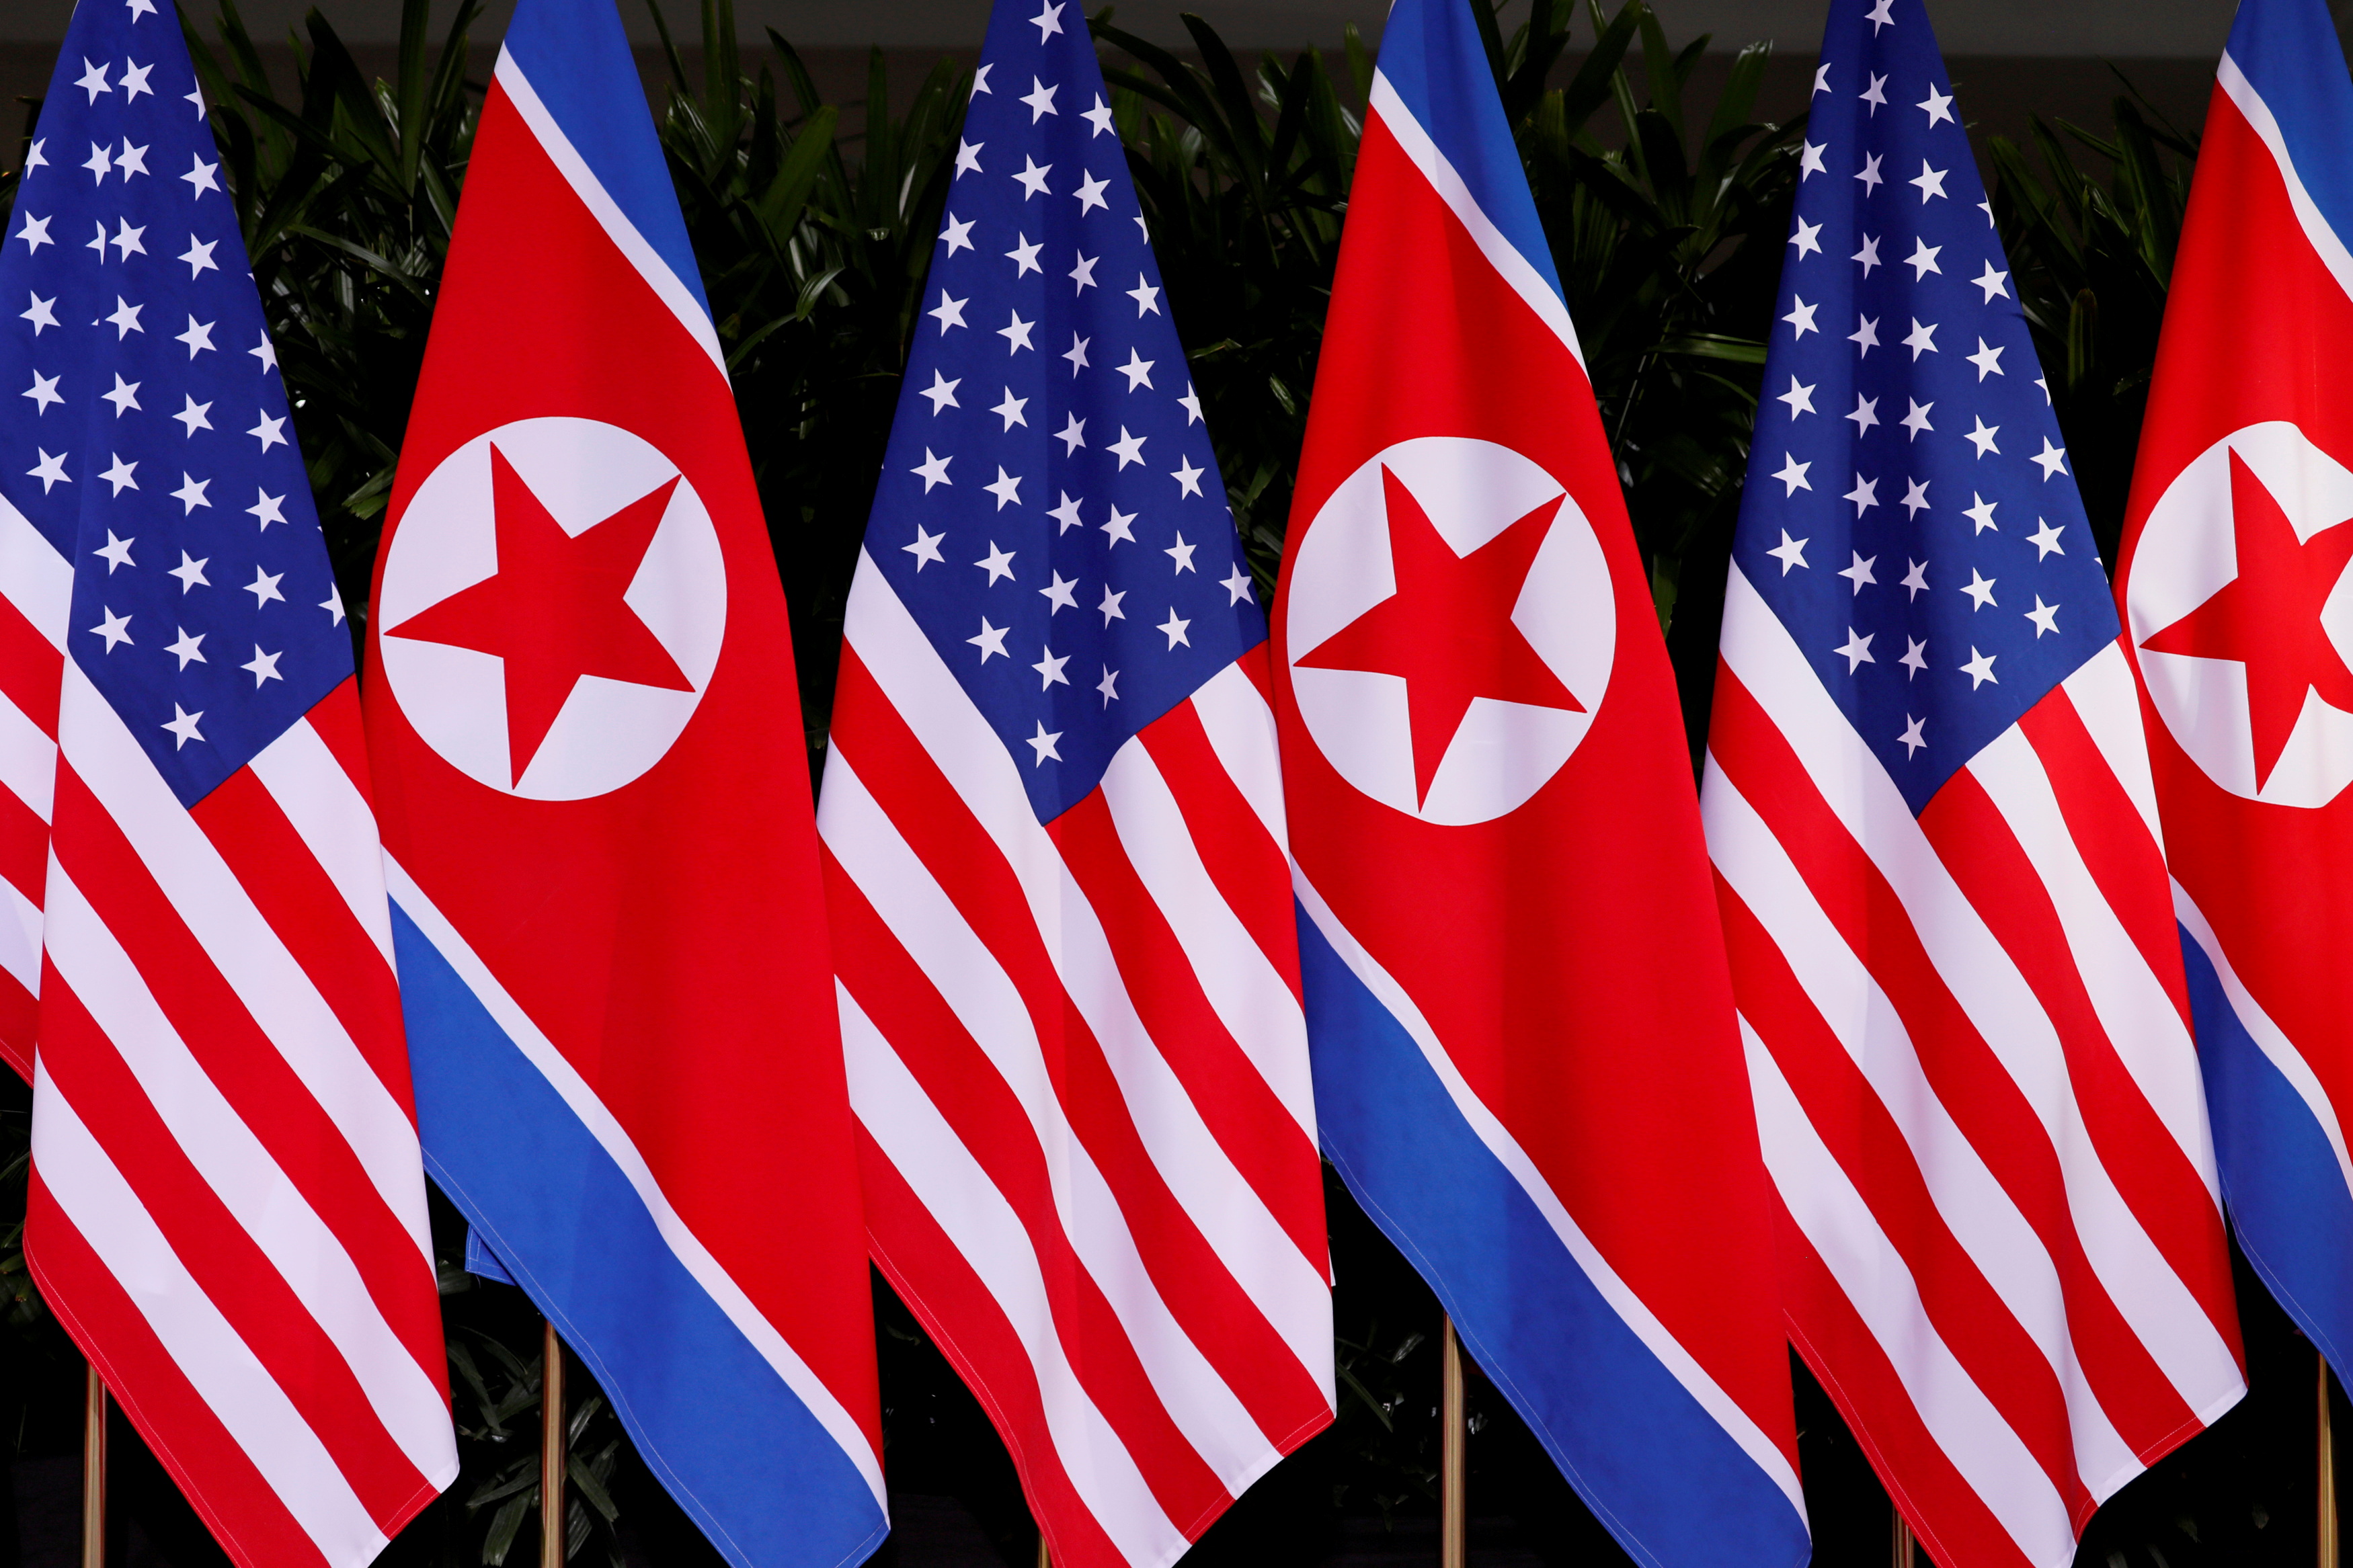 North Korea threatens nuclear retaliation over US displays of military